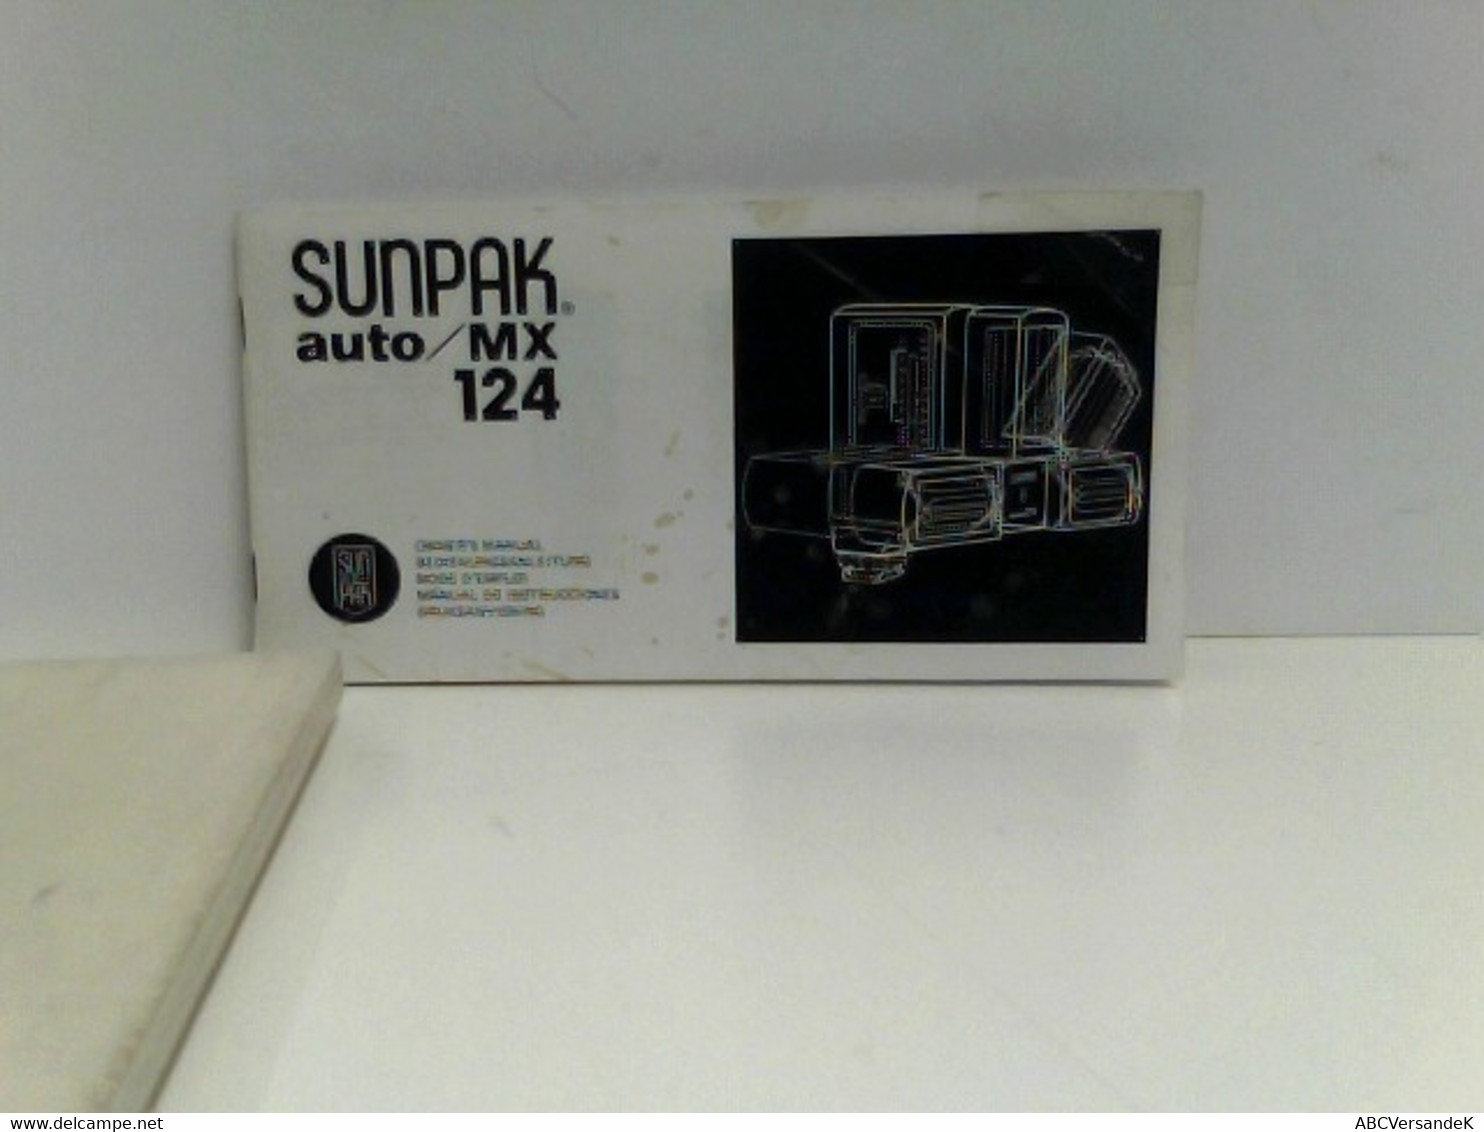 Sunpak Auto/MX 124 Blitzlichtgeräte - Photographie